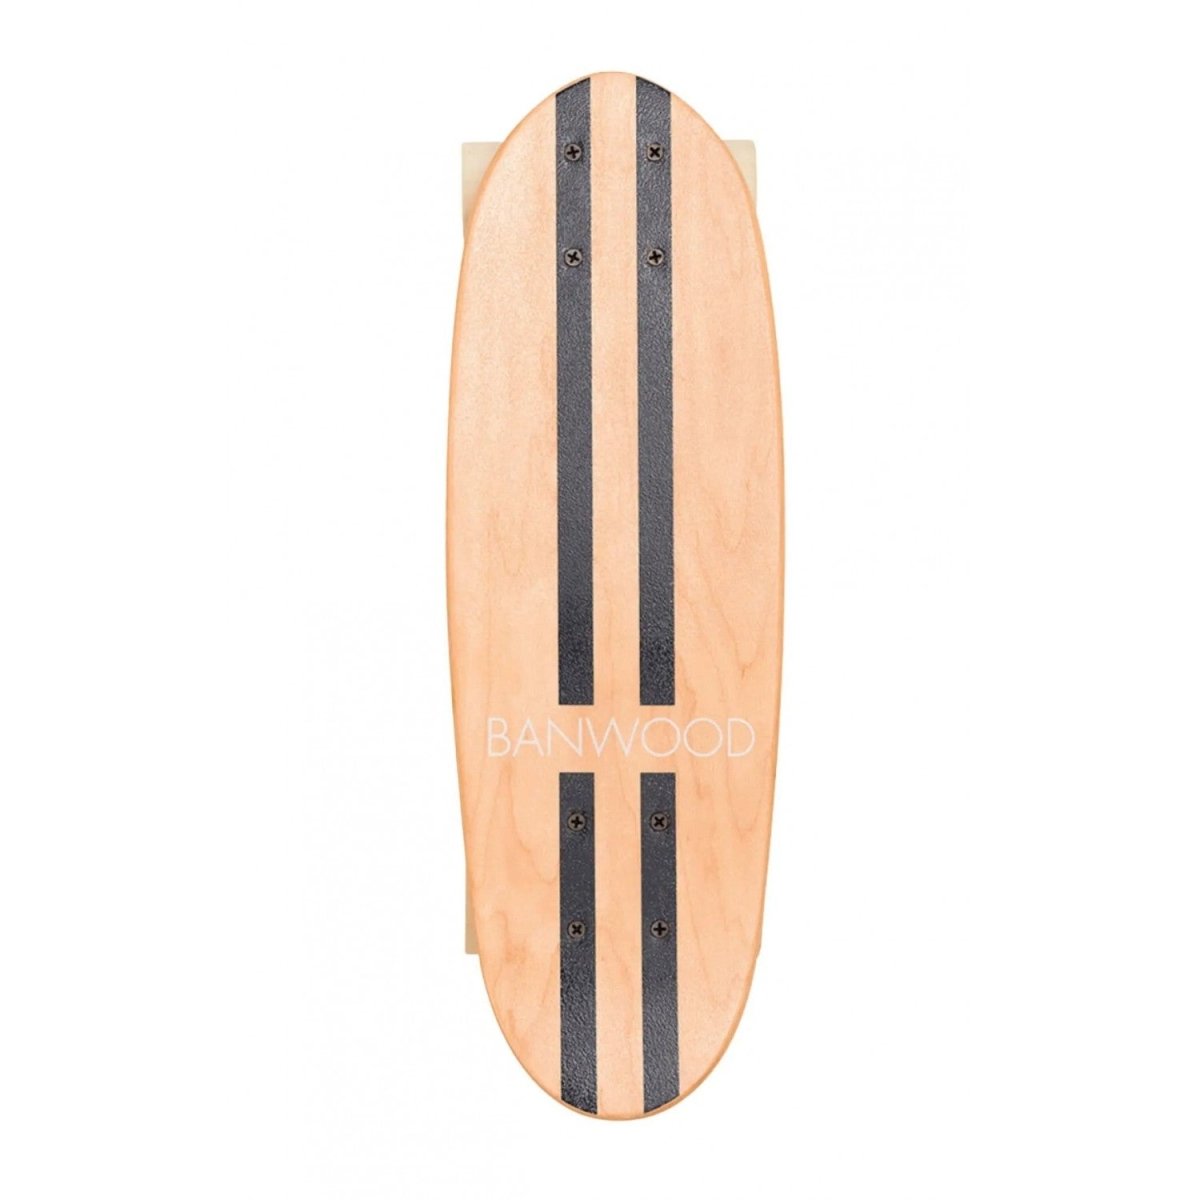 Banwood  Skateboard